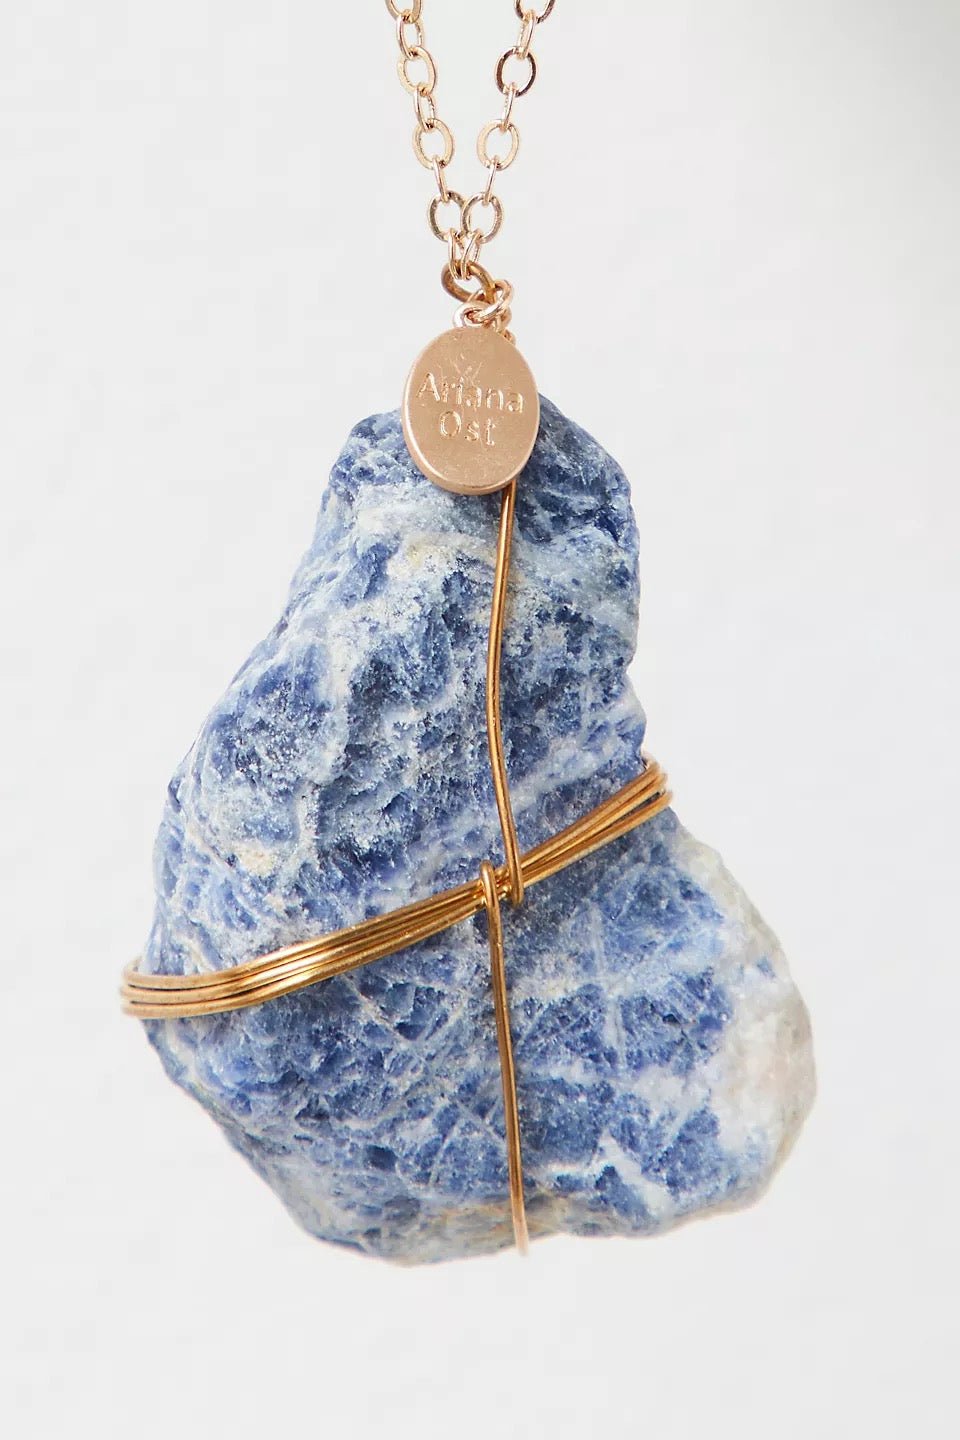 Healing Crystal Sodalite Ornament - Ariana Ost